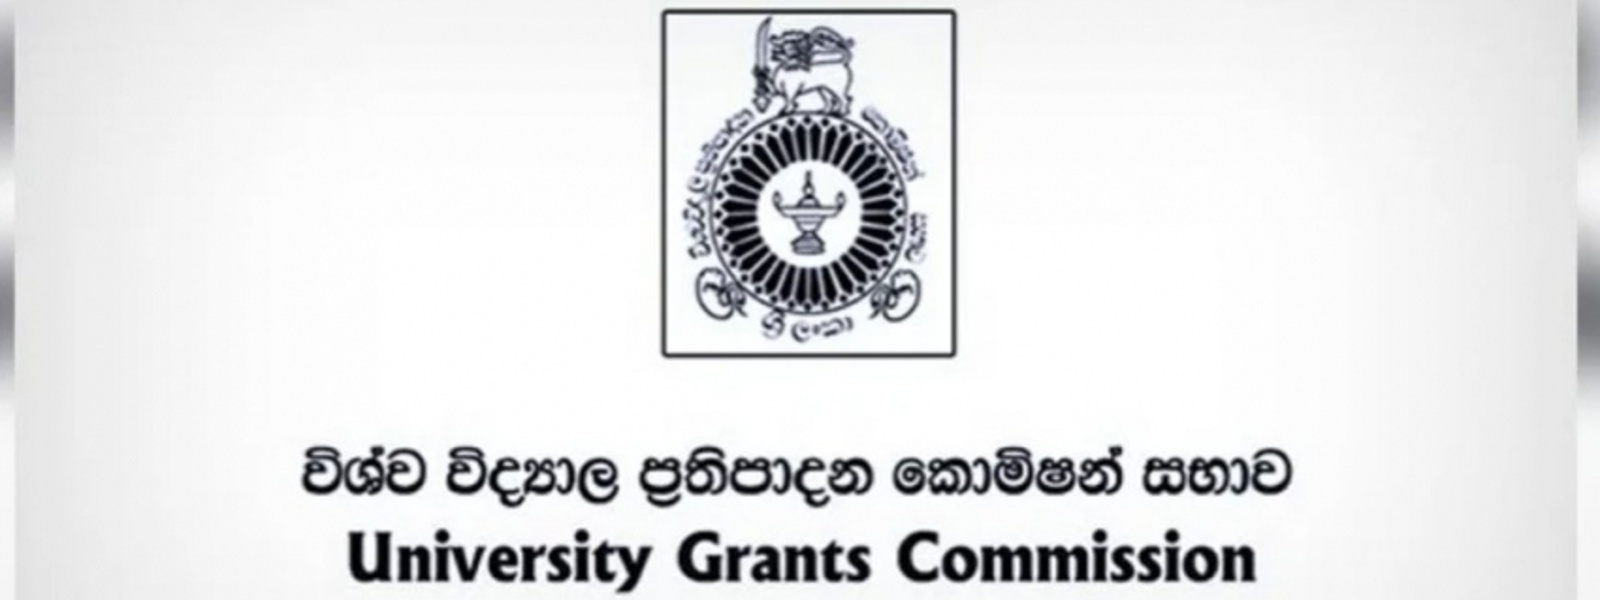 UGC & Vice Chancellors to meet on Monday (22)